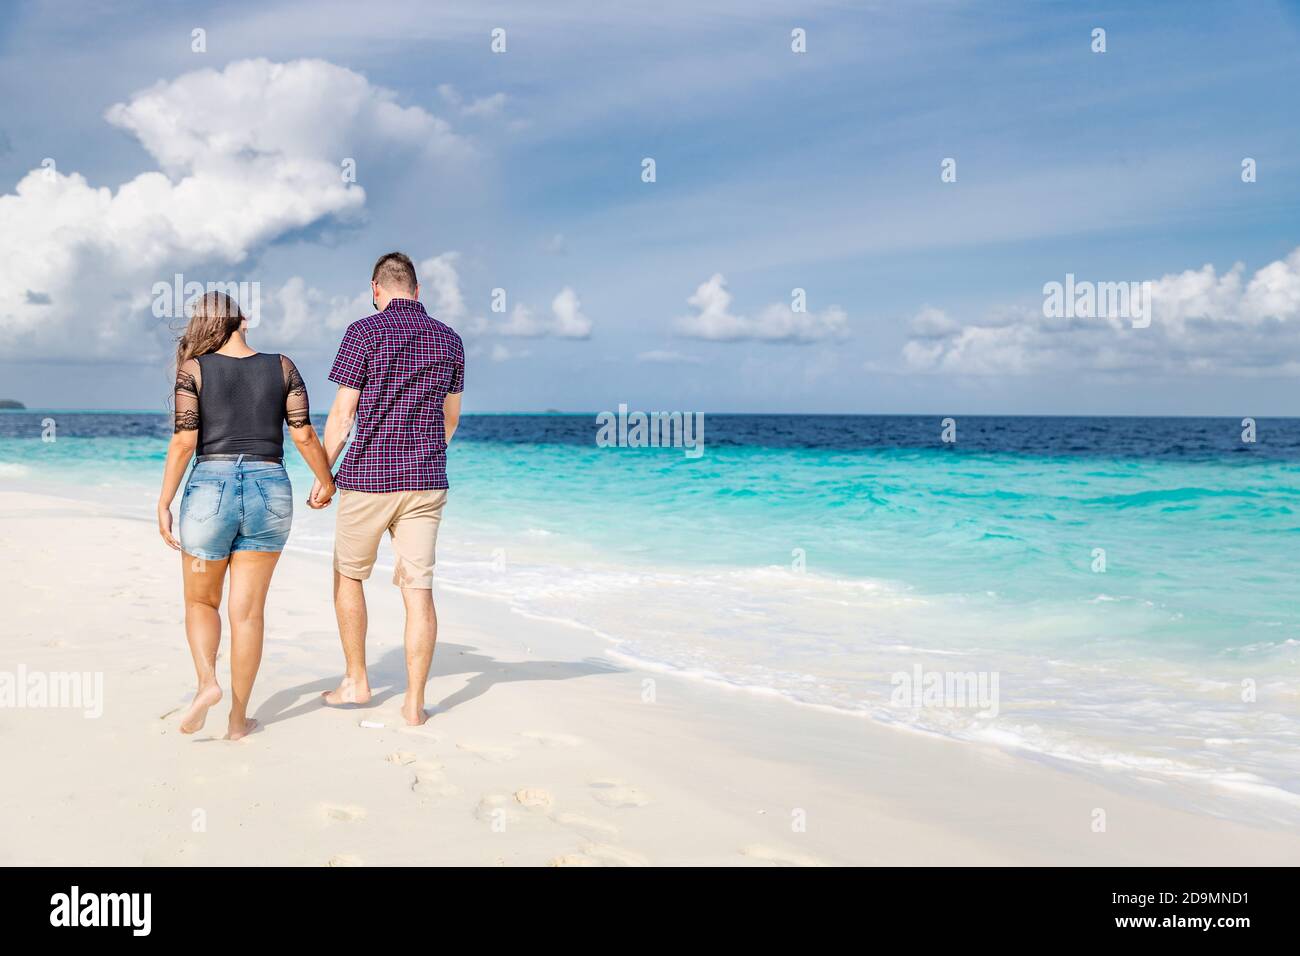 Couple walking on beach. Luxury summer honeymoon vacation destination. Tropical nature beach scenery Stock Photo